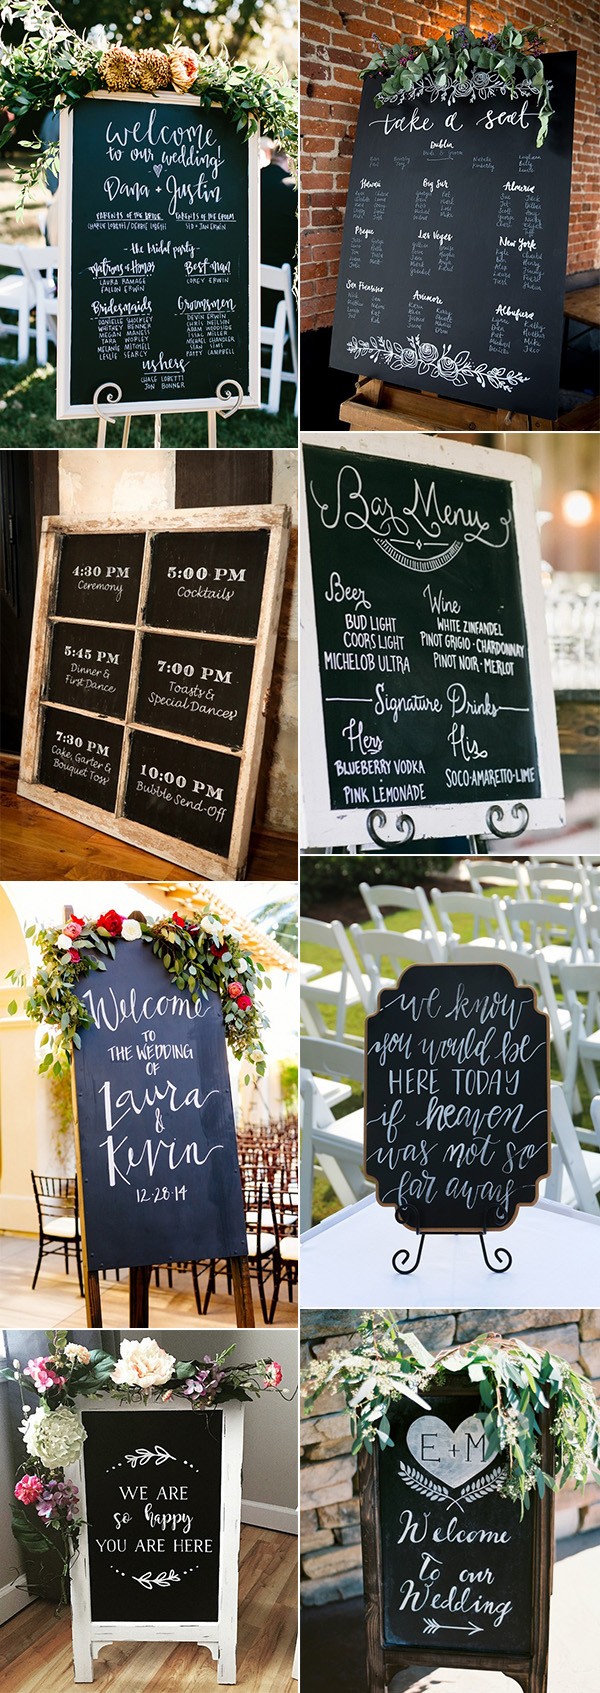 chic wedding chalkboard sign ideas for 2018